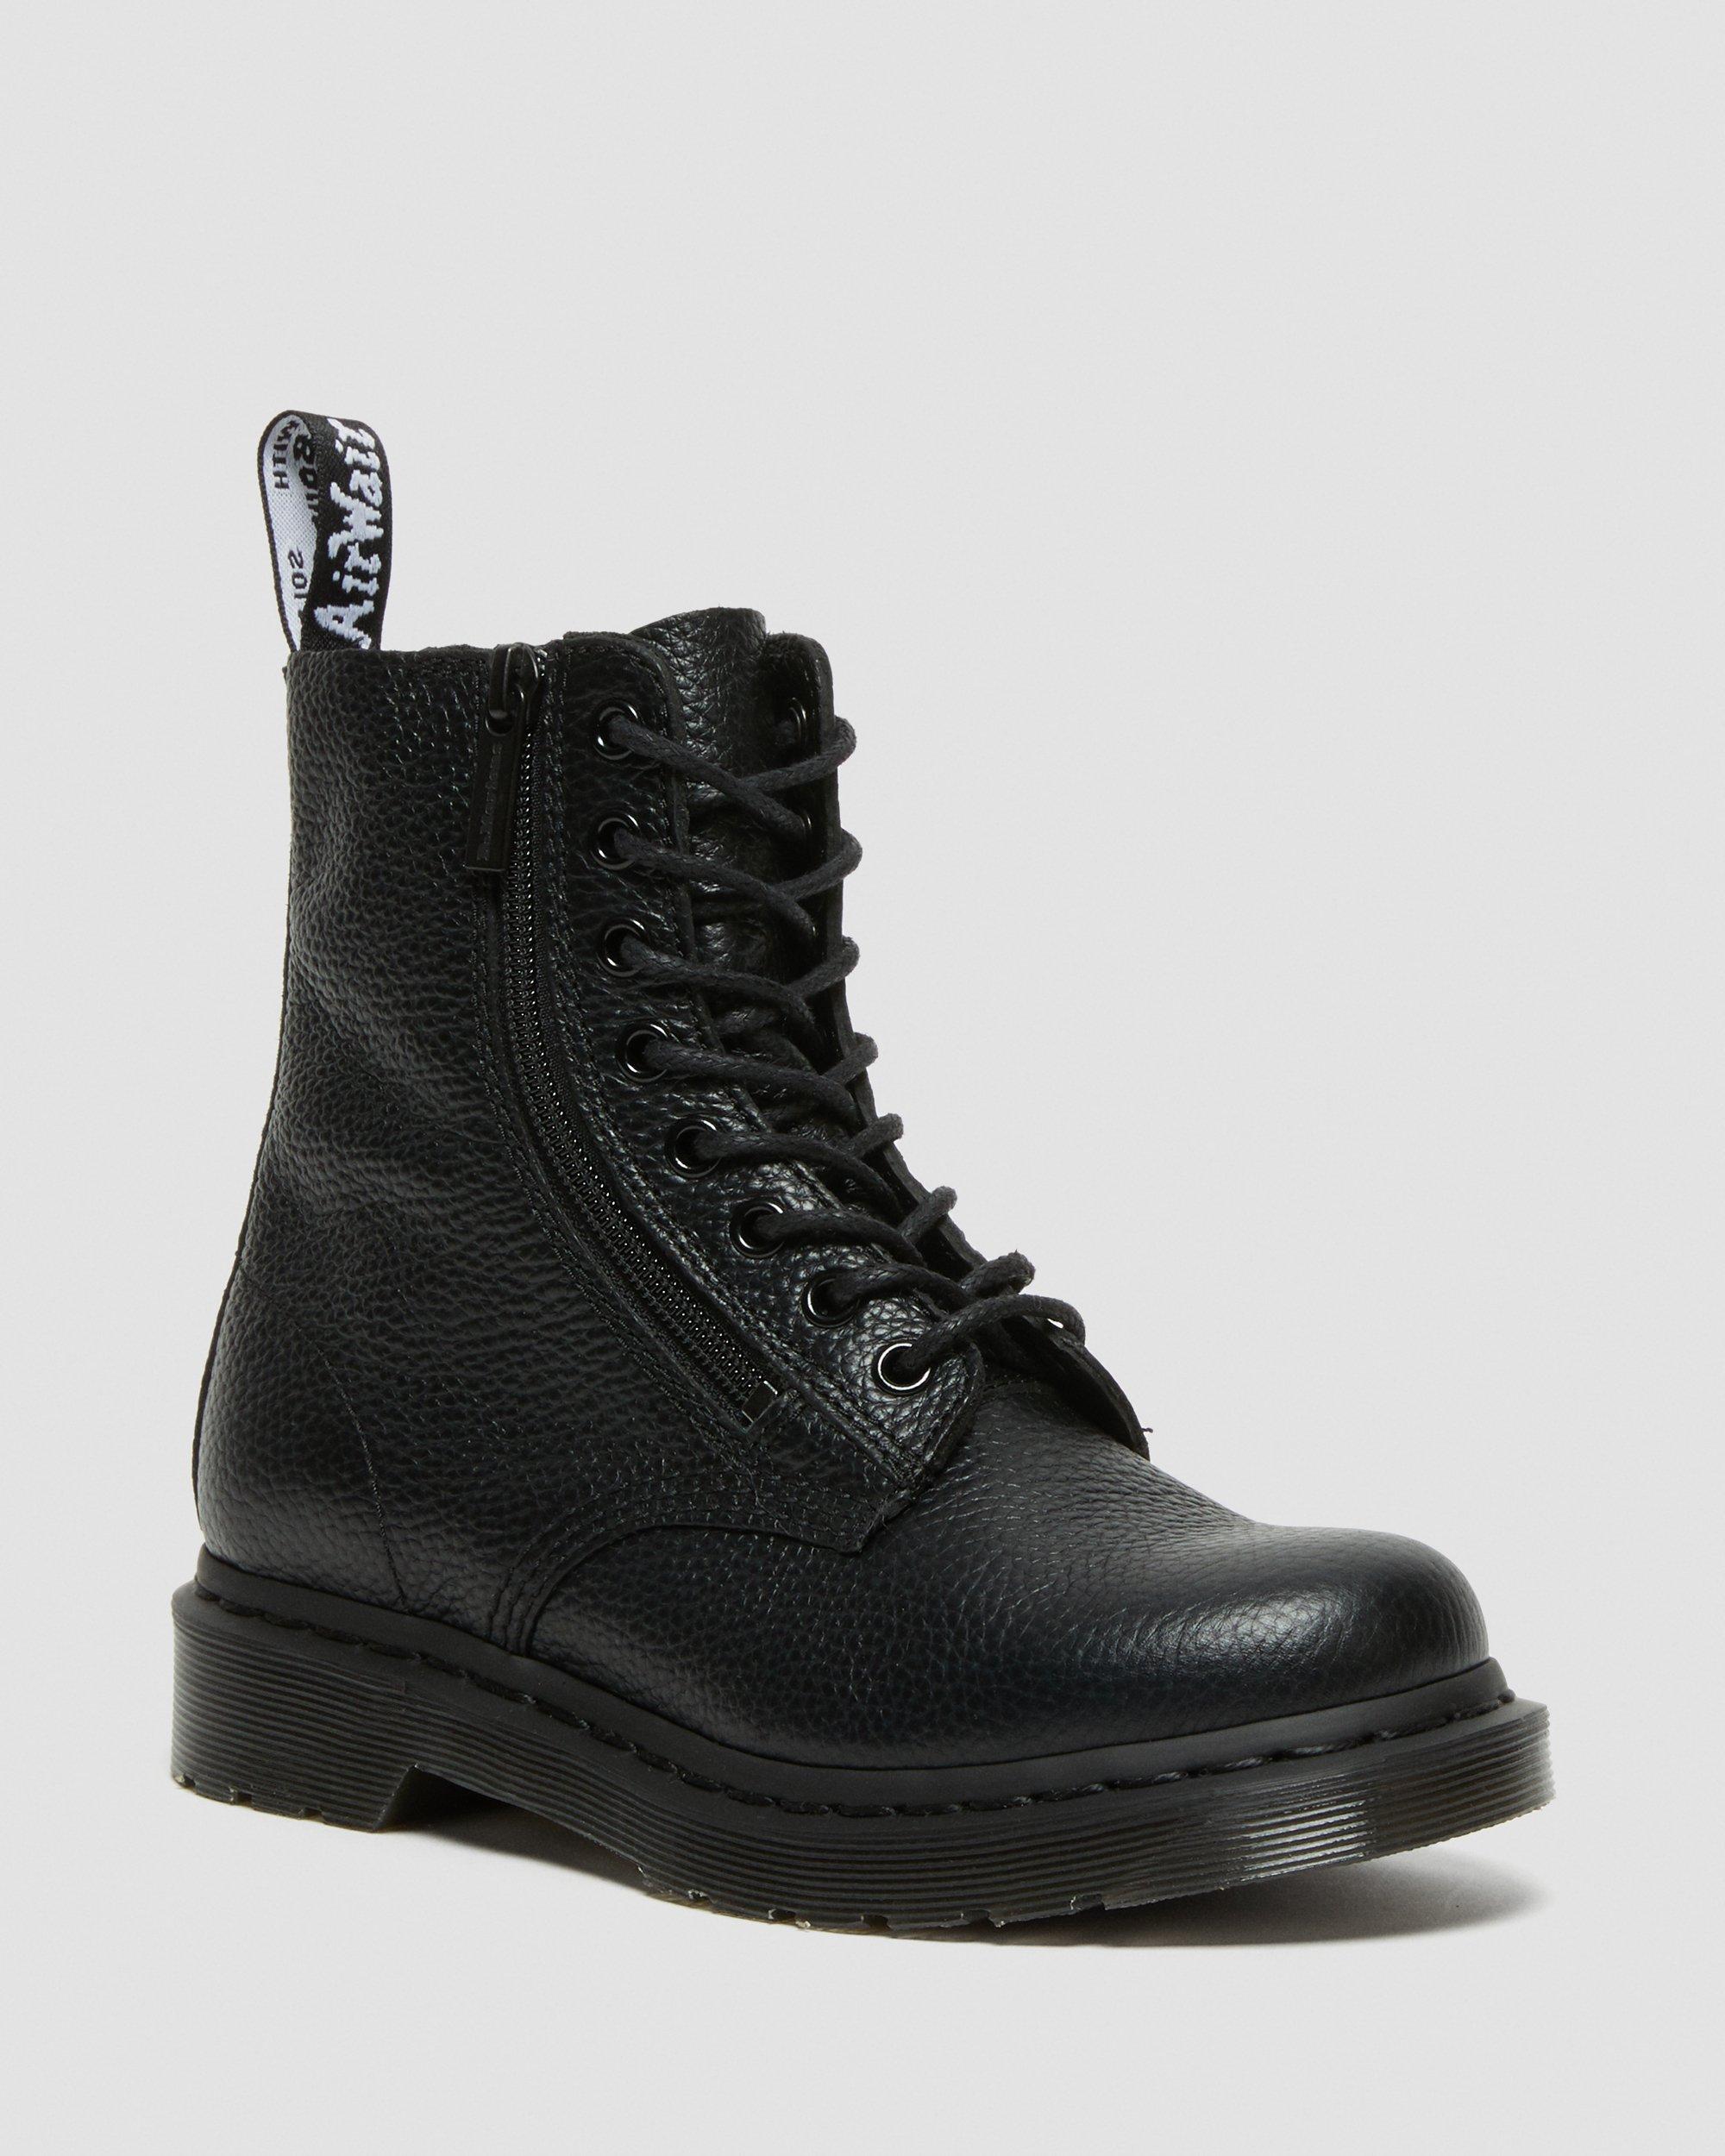 Catarina boots WOMEN FASHION Footwear Boots Combat discount 43% Black 39                  EU 